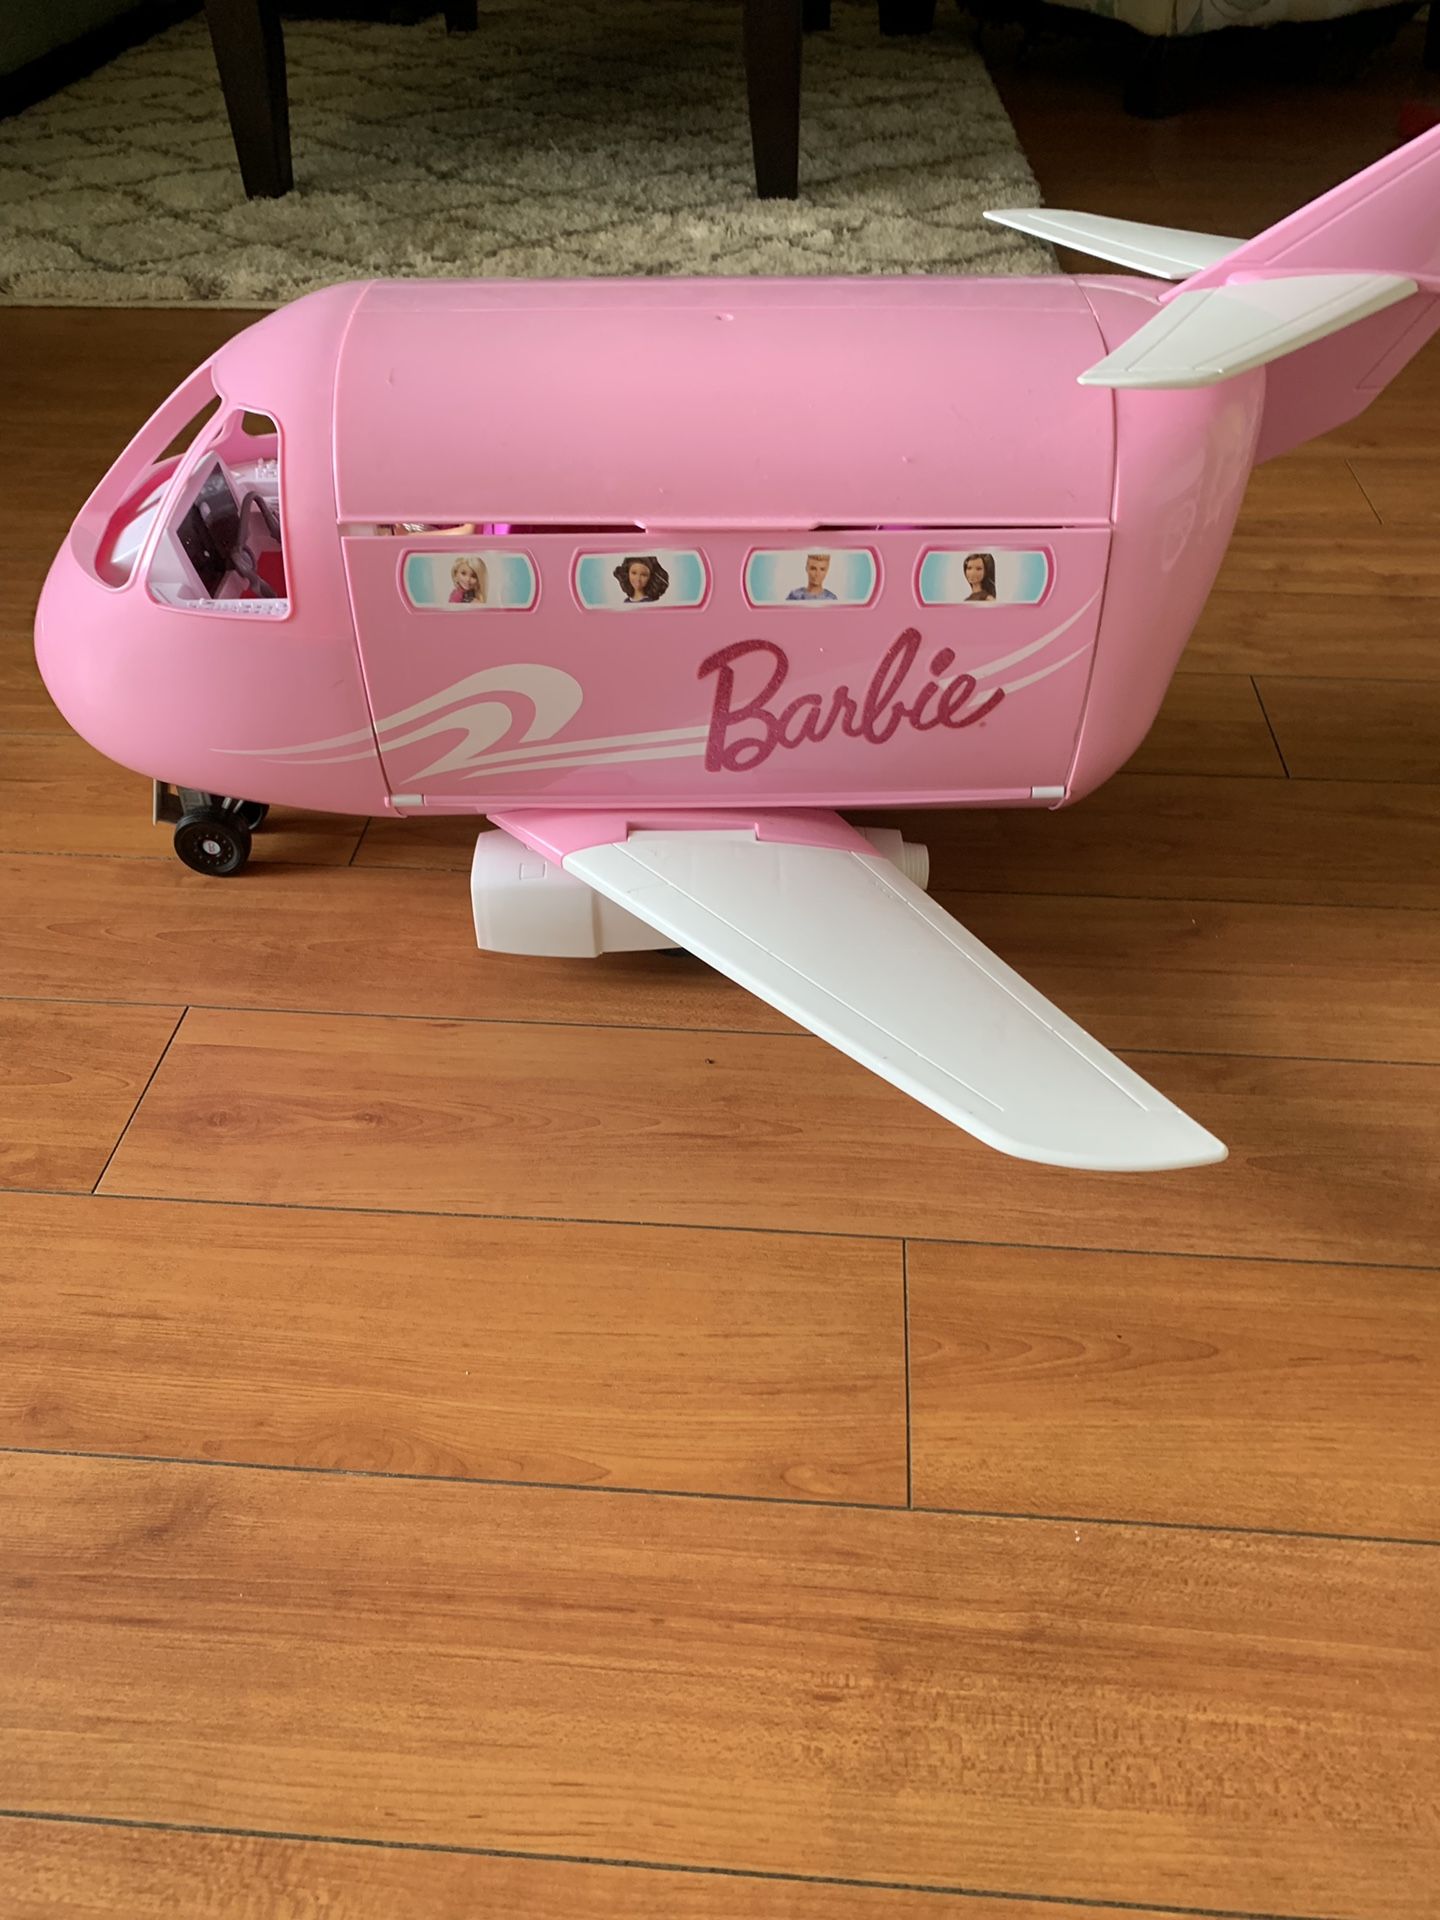 Official Barbie air plane.